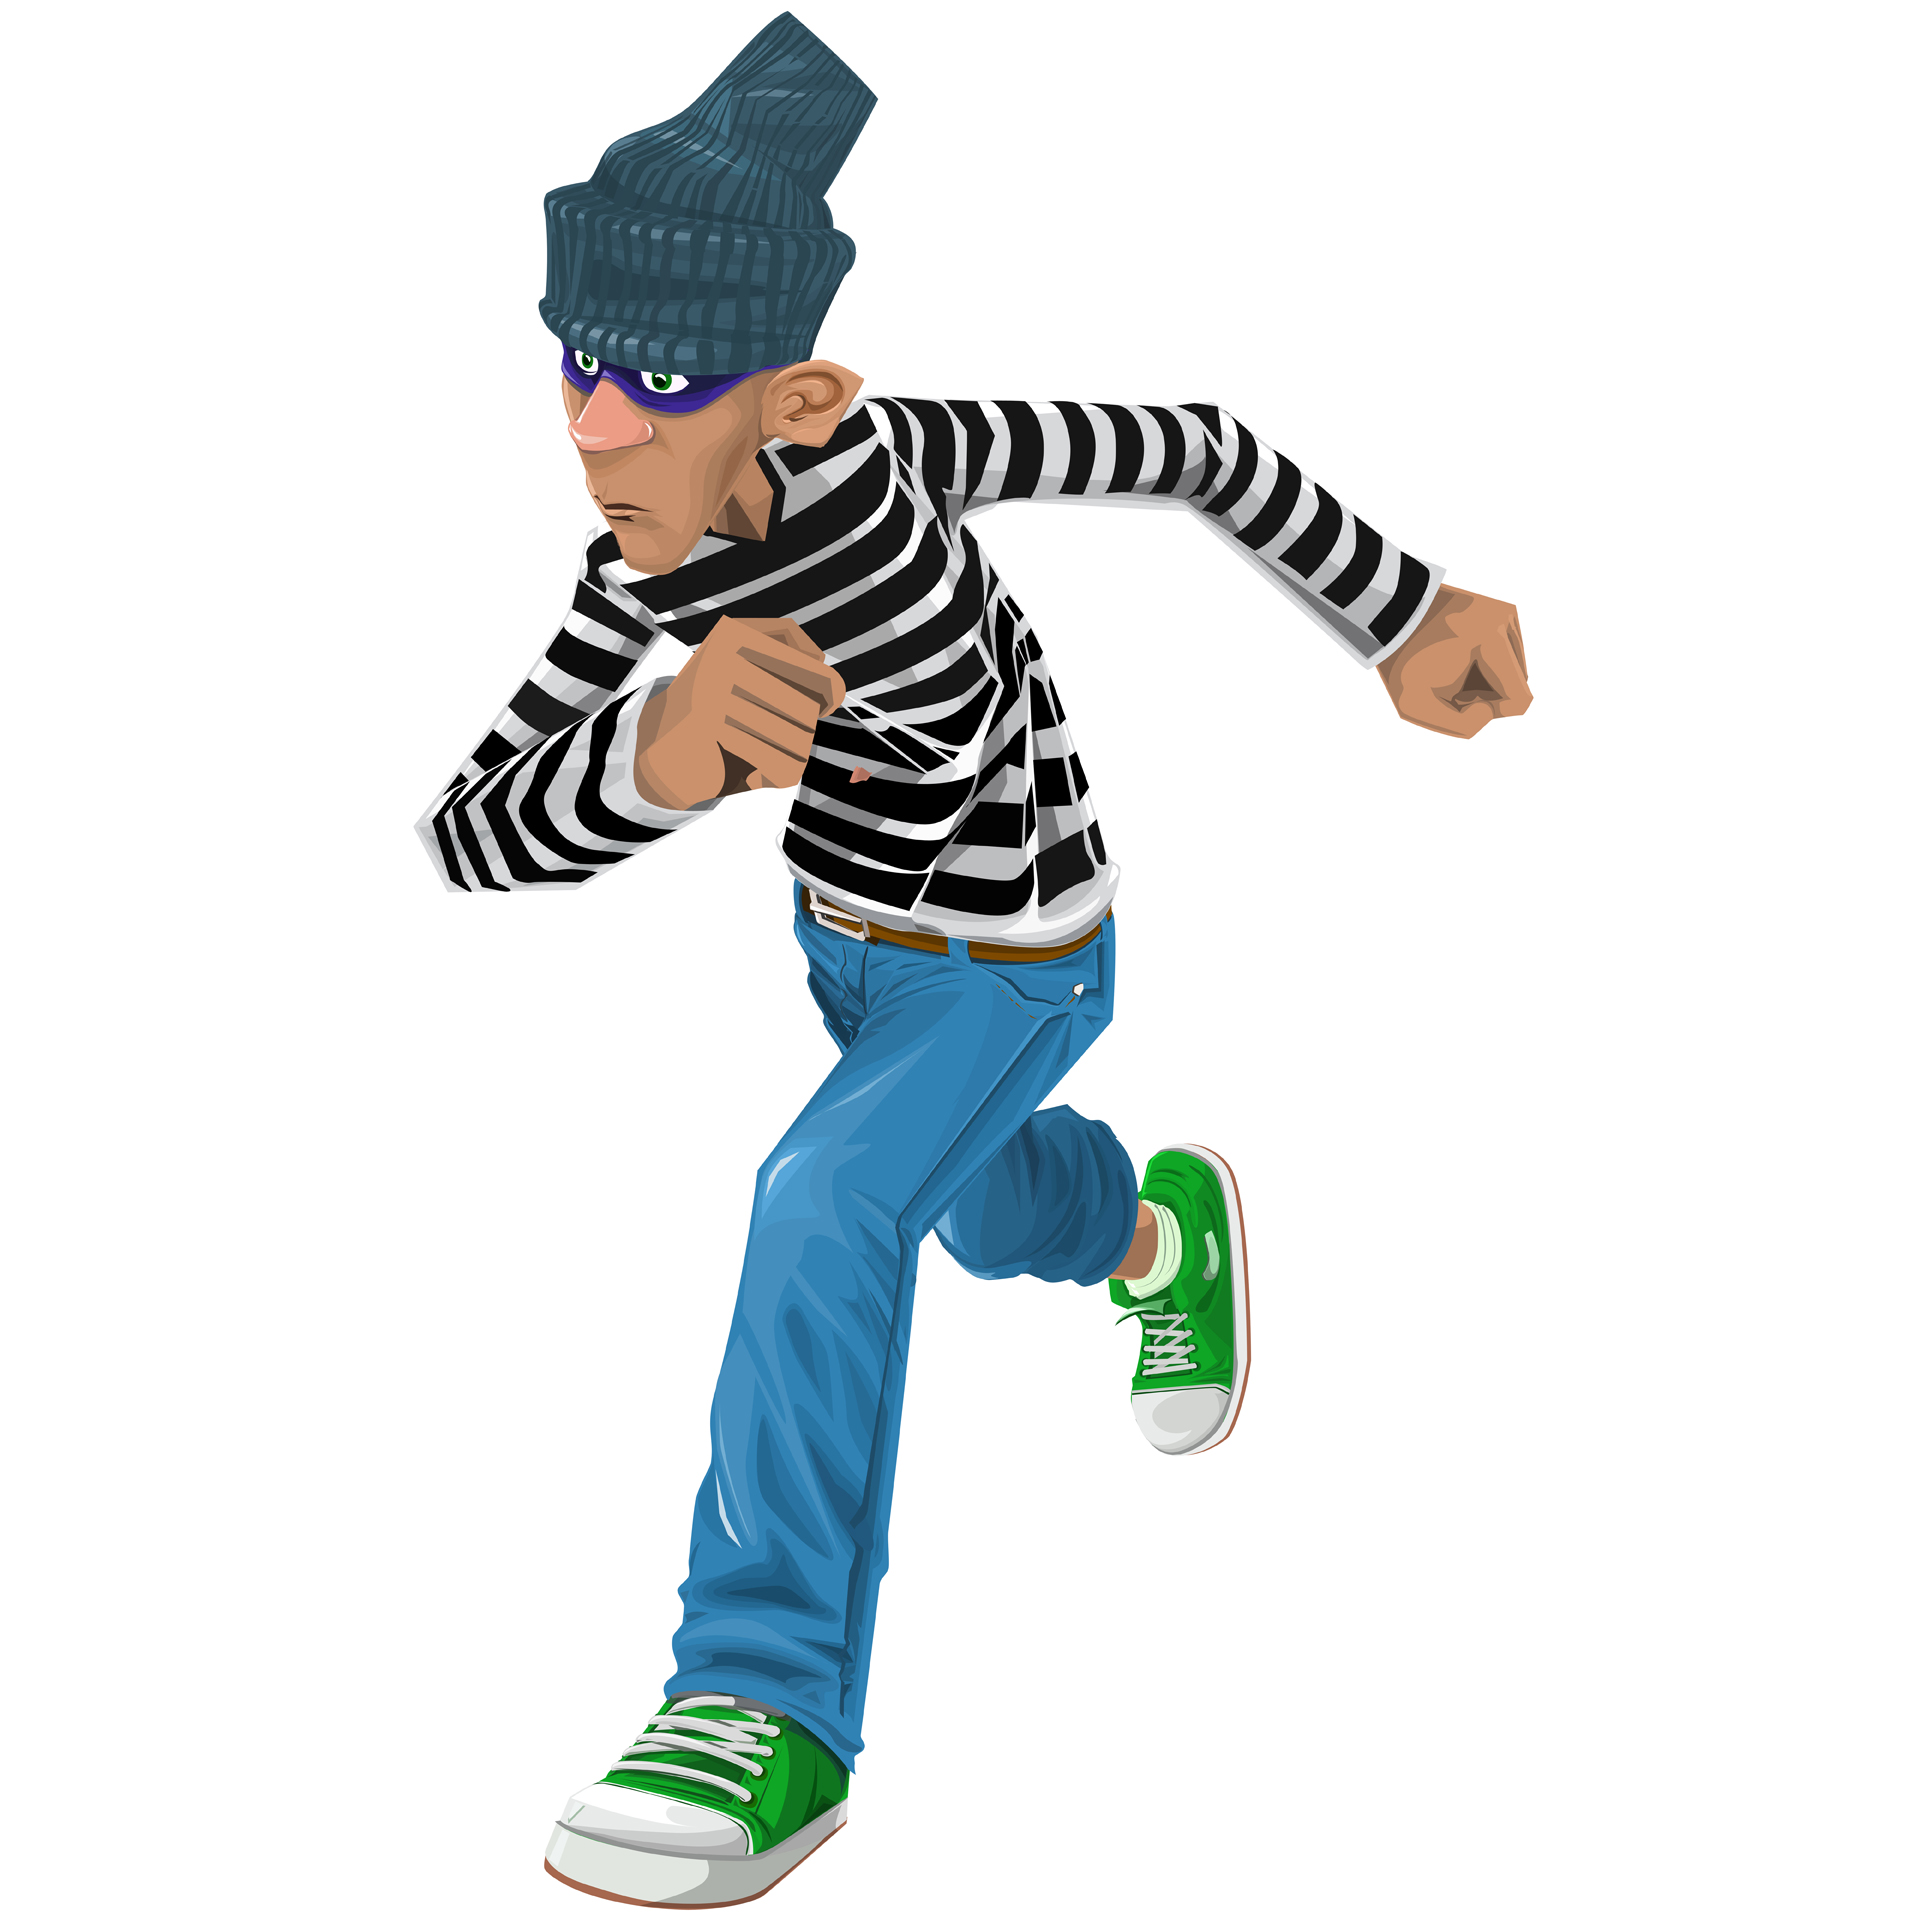 Eskees Portfolio » Cop & Robber Character Illustration